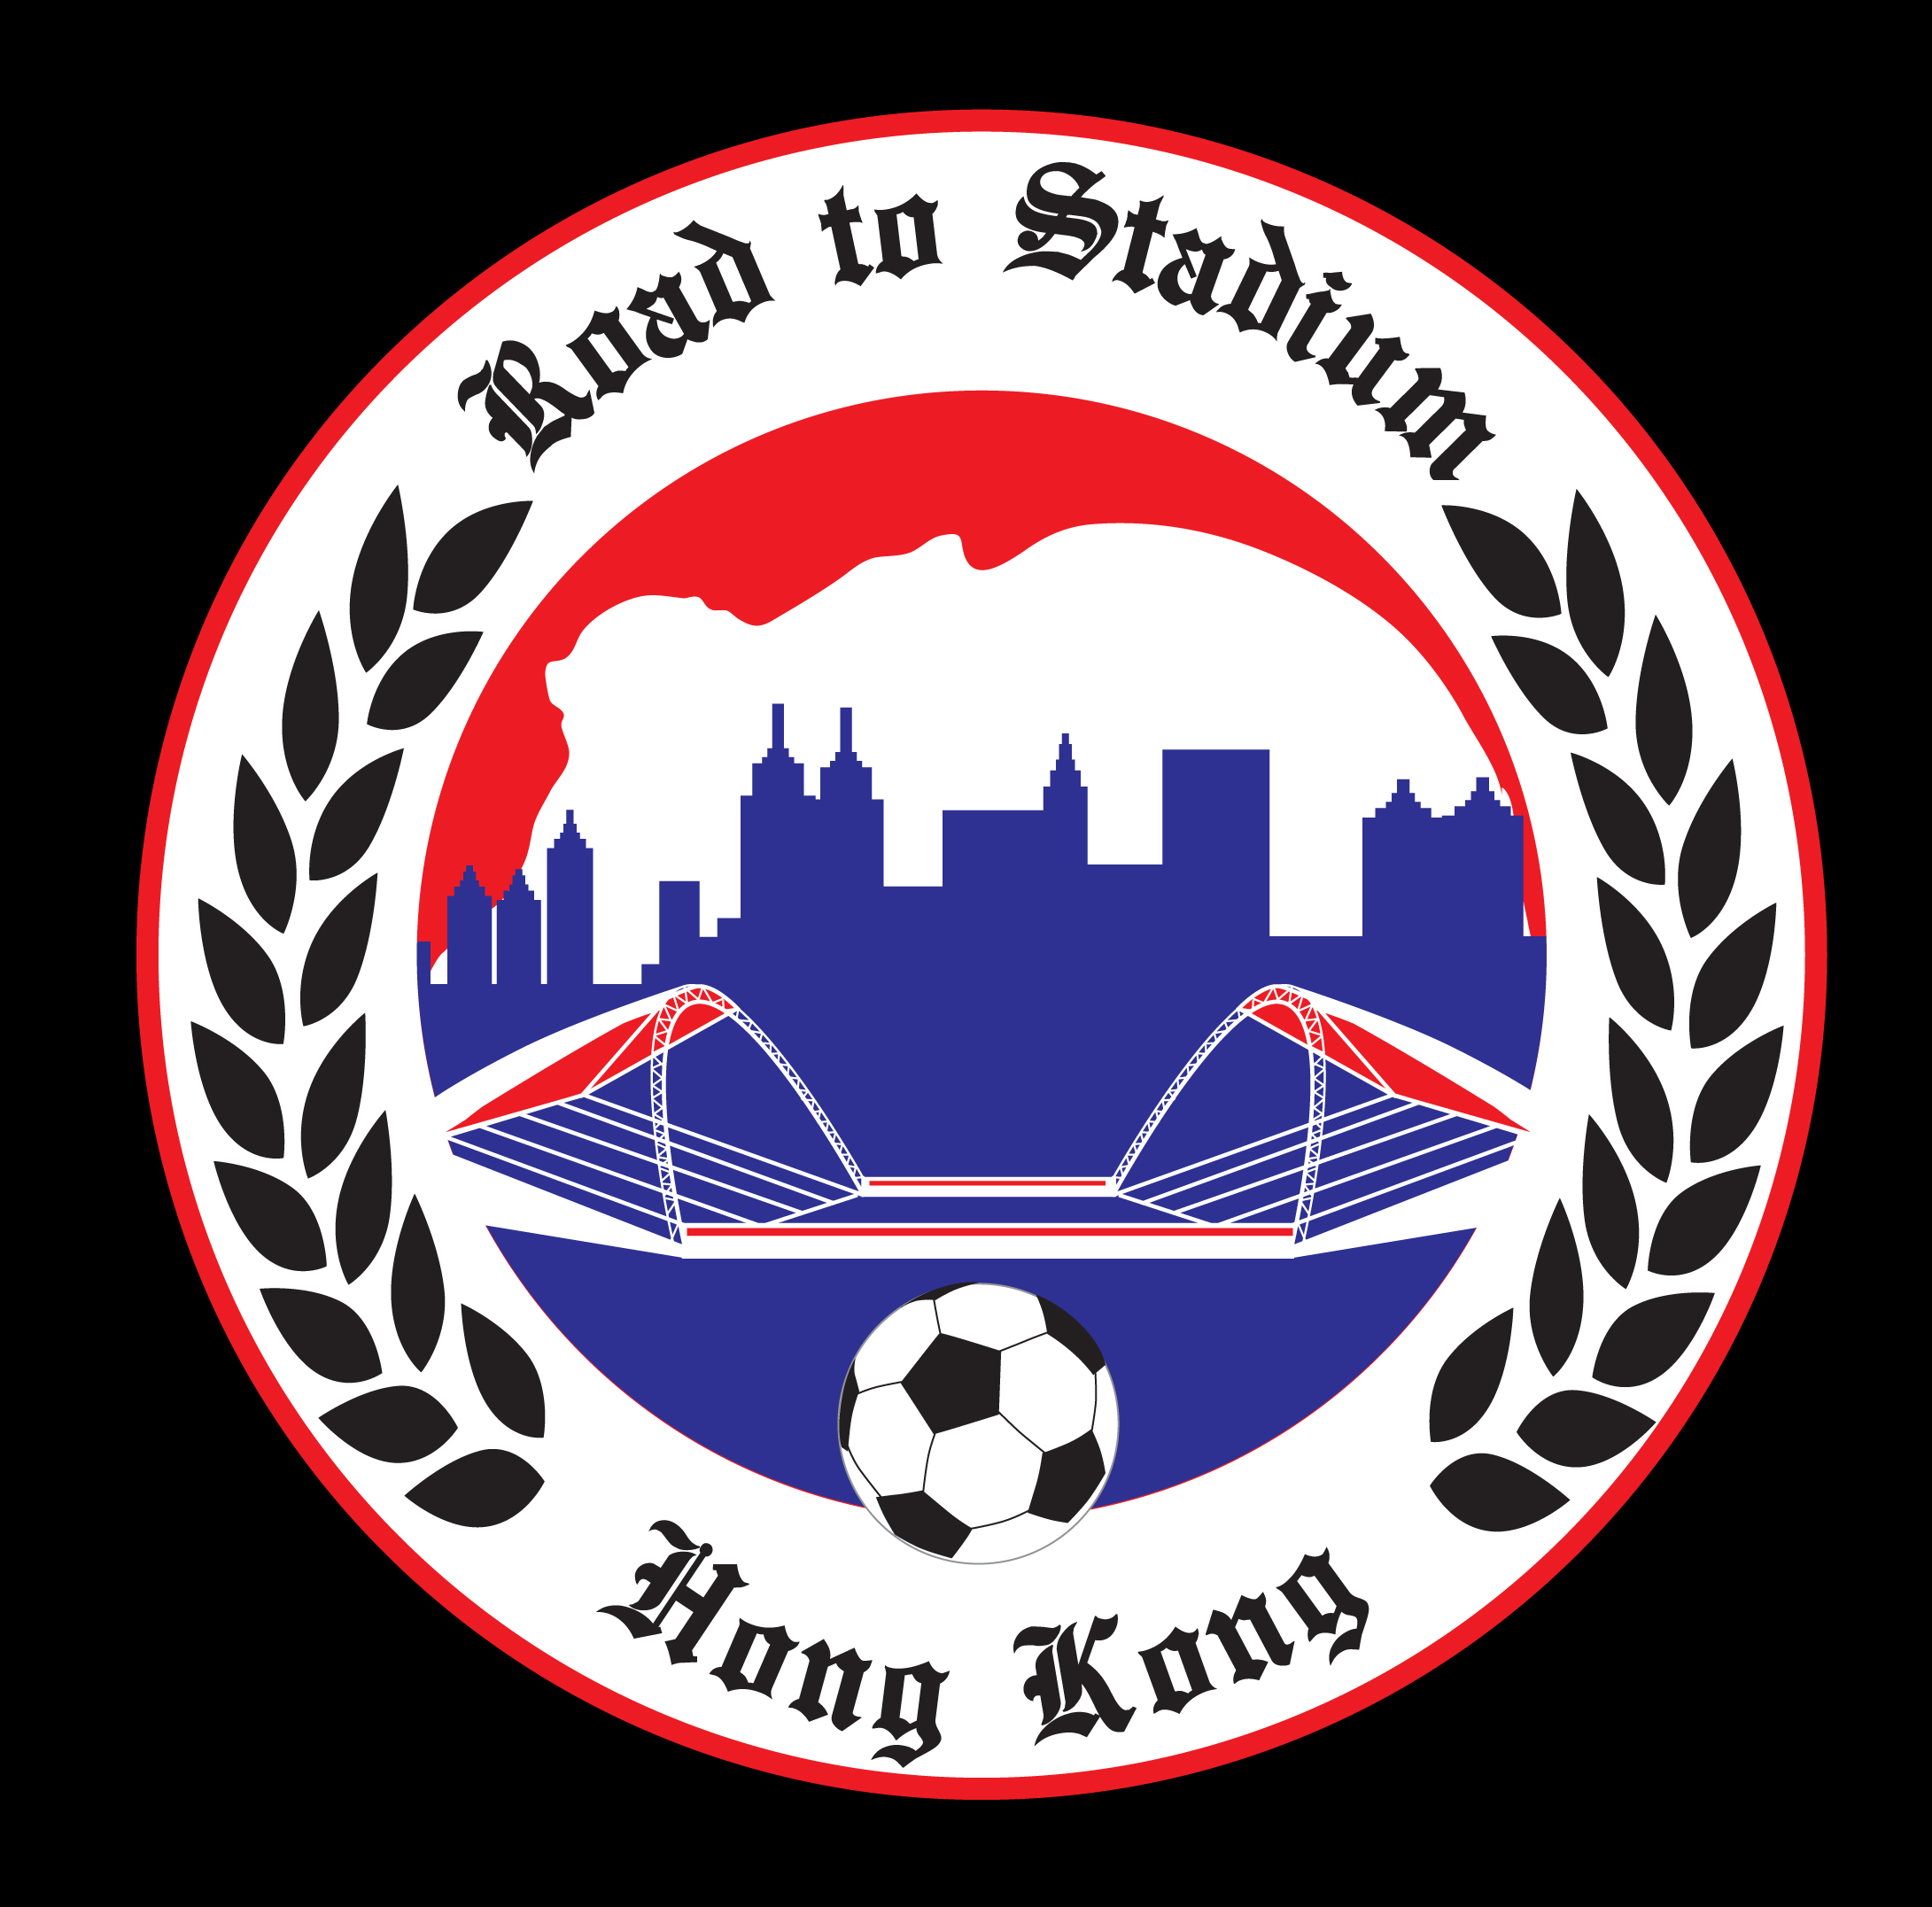 SL_LO_0024_V1-1 road to stadium logo.jpg